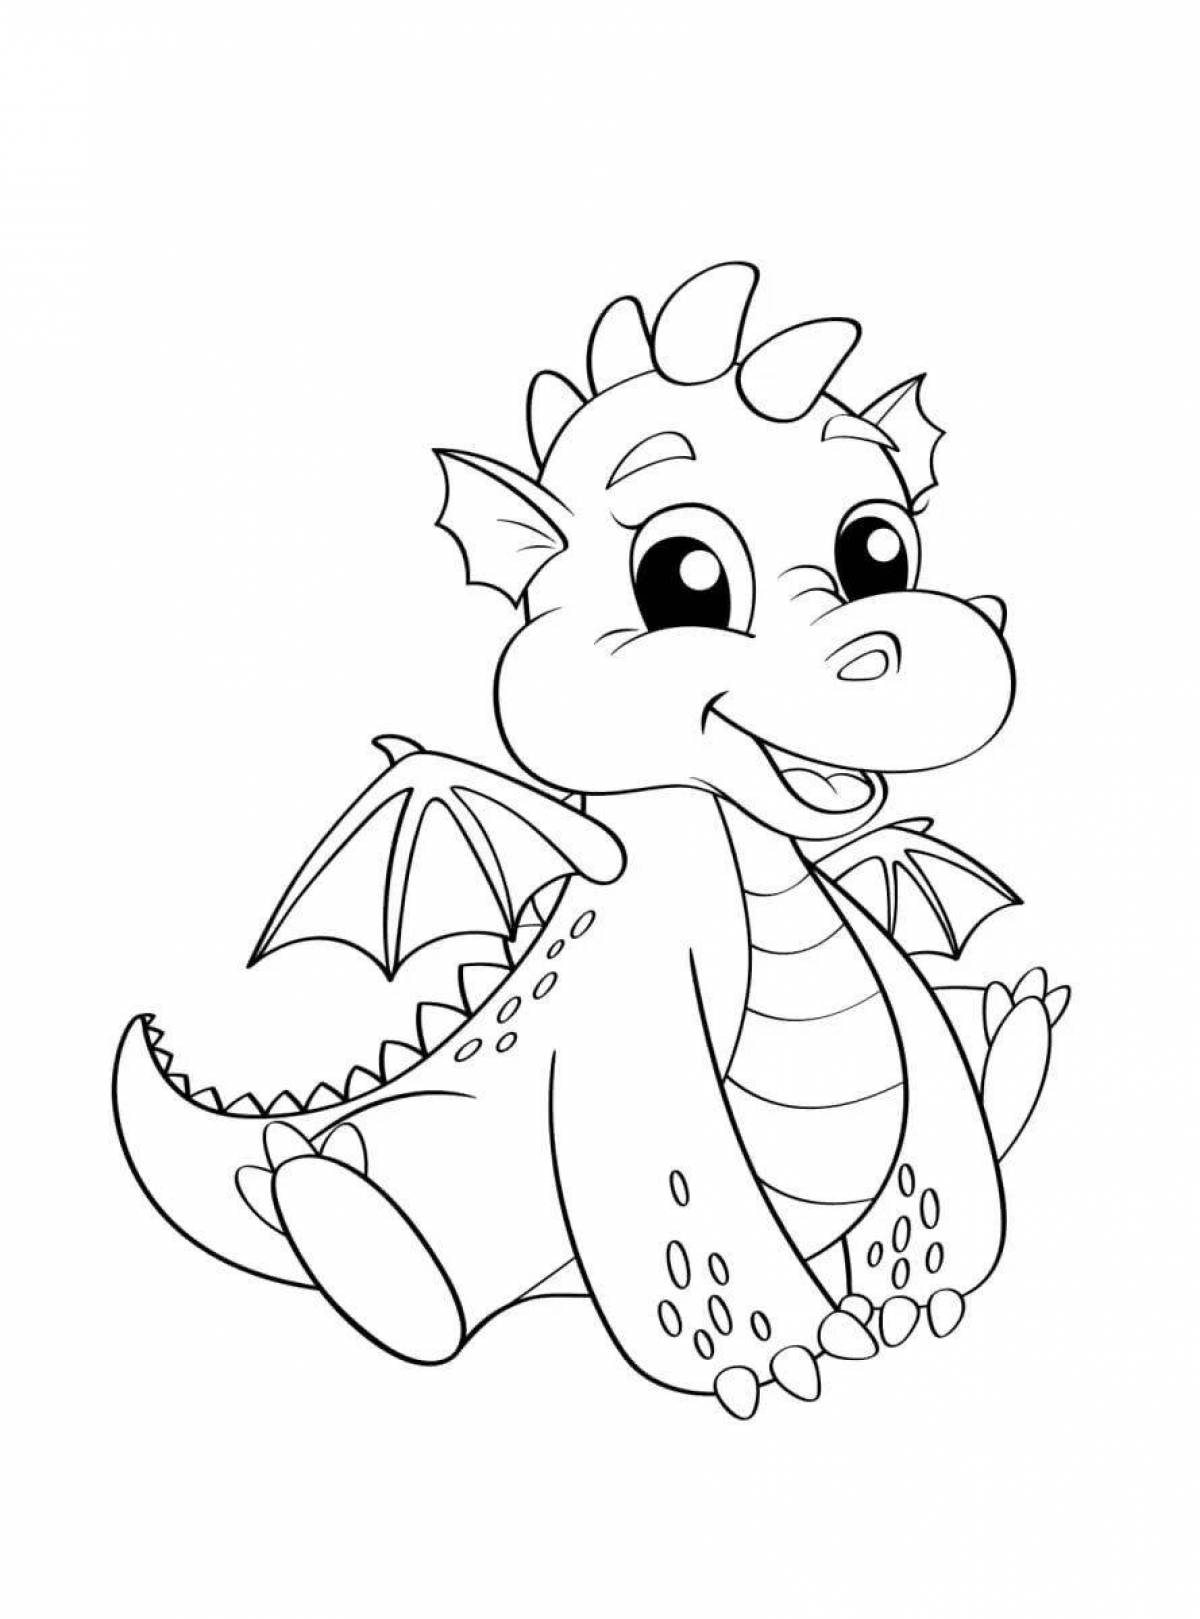 Fun dragon coloring book for kids